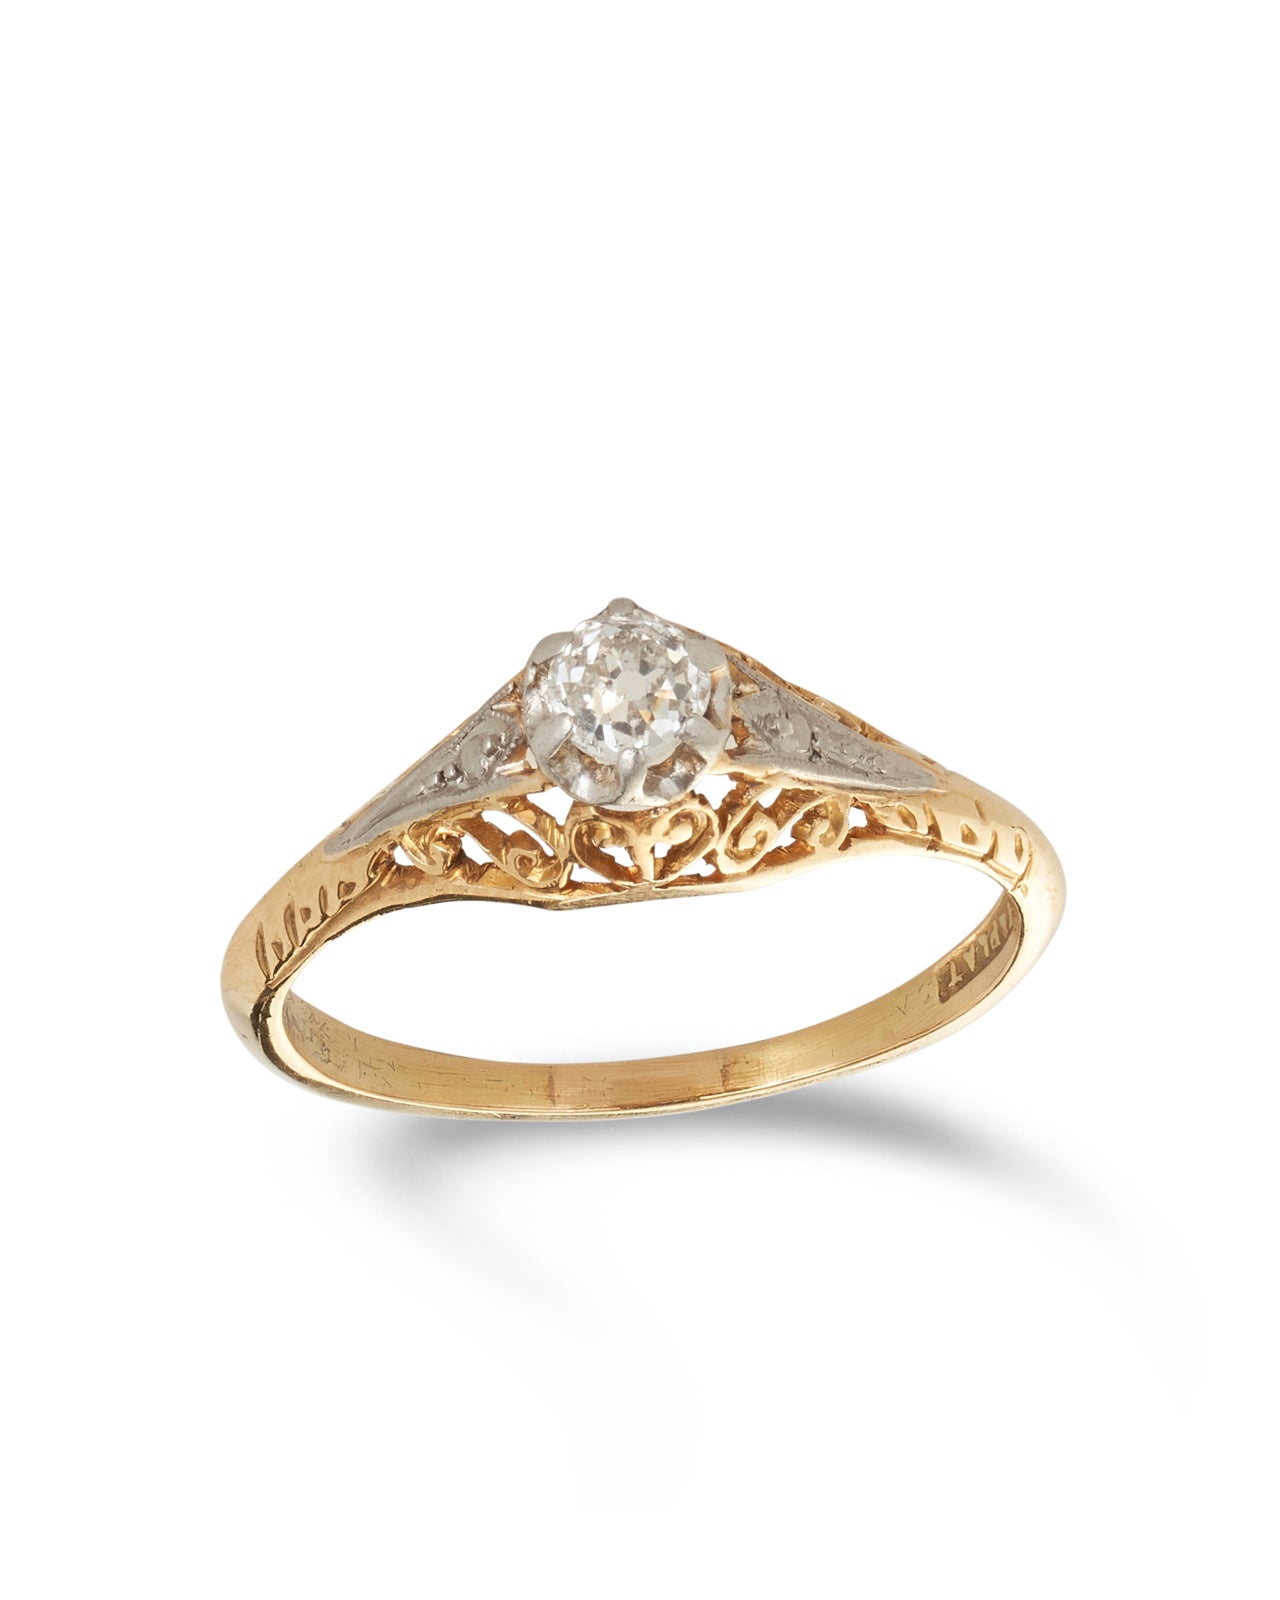 Edwardian Solitaire Diamond Ring